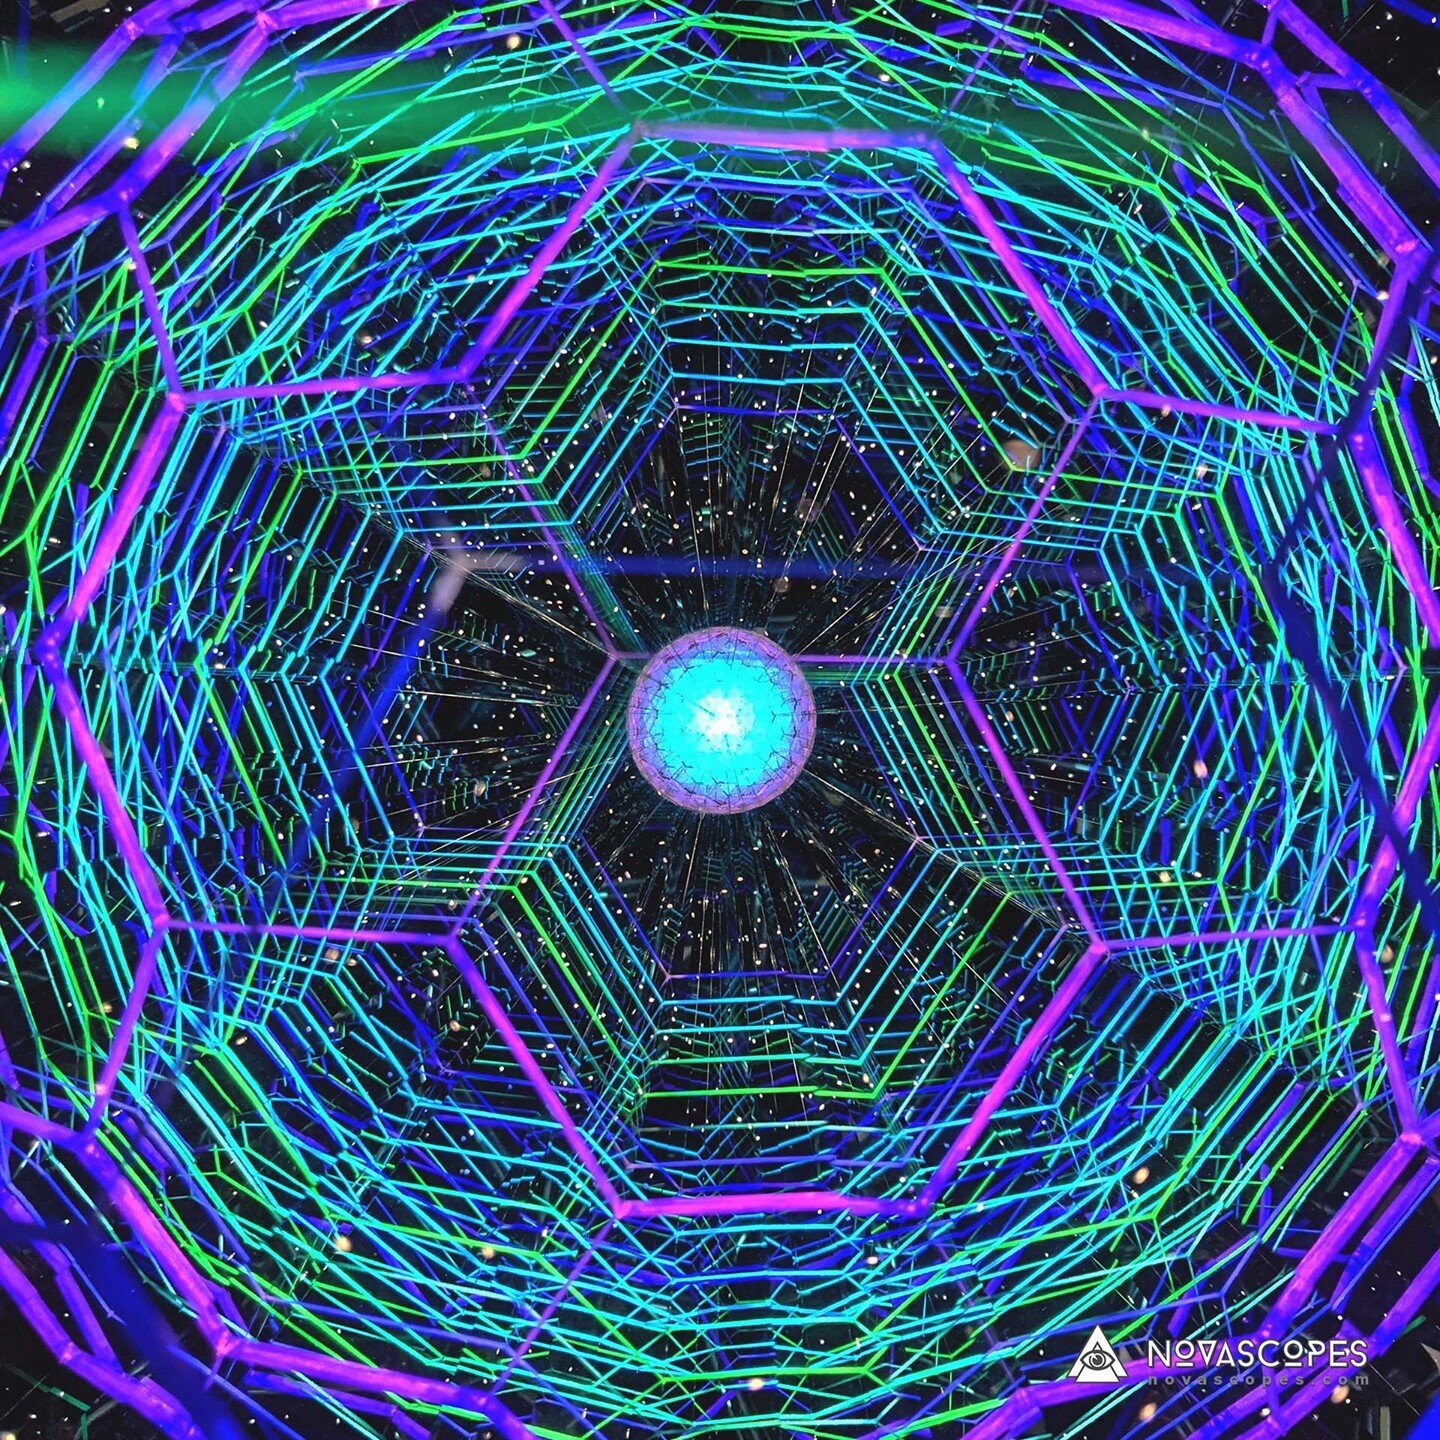 Take a look at the inside of this 12-inch &quot;Slim&quot; Nova Scope
.
.
.
.
.
#kaleidoscope #novascopes #wow #geometricart #handmade #kaleidoscopeart #stainedglassart #sacredgeometry #psychedelicart #fractals